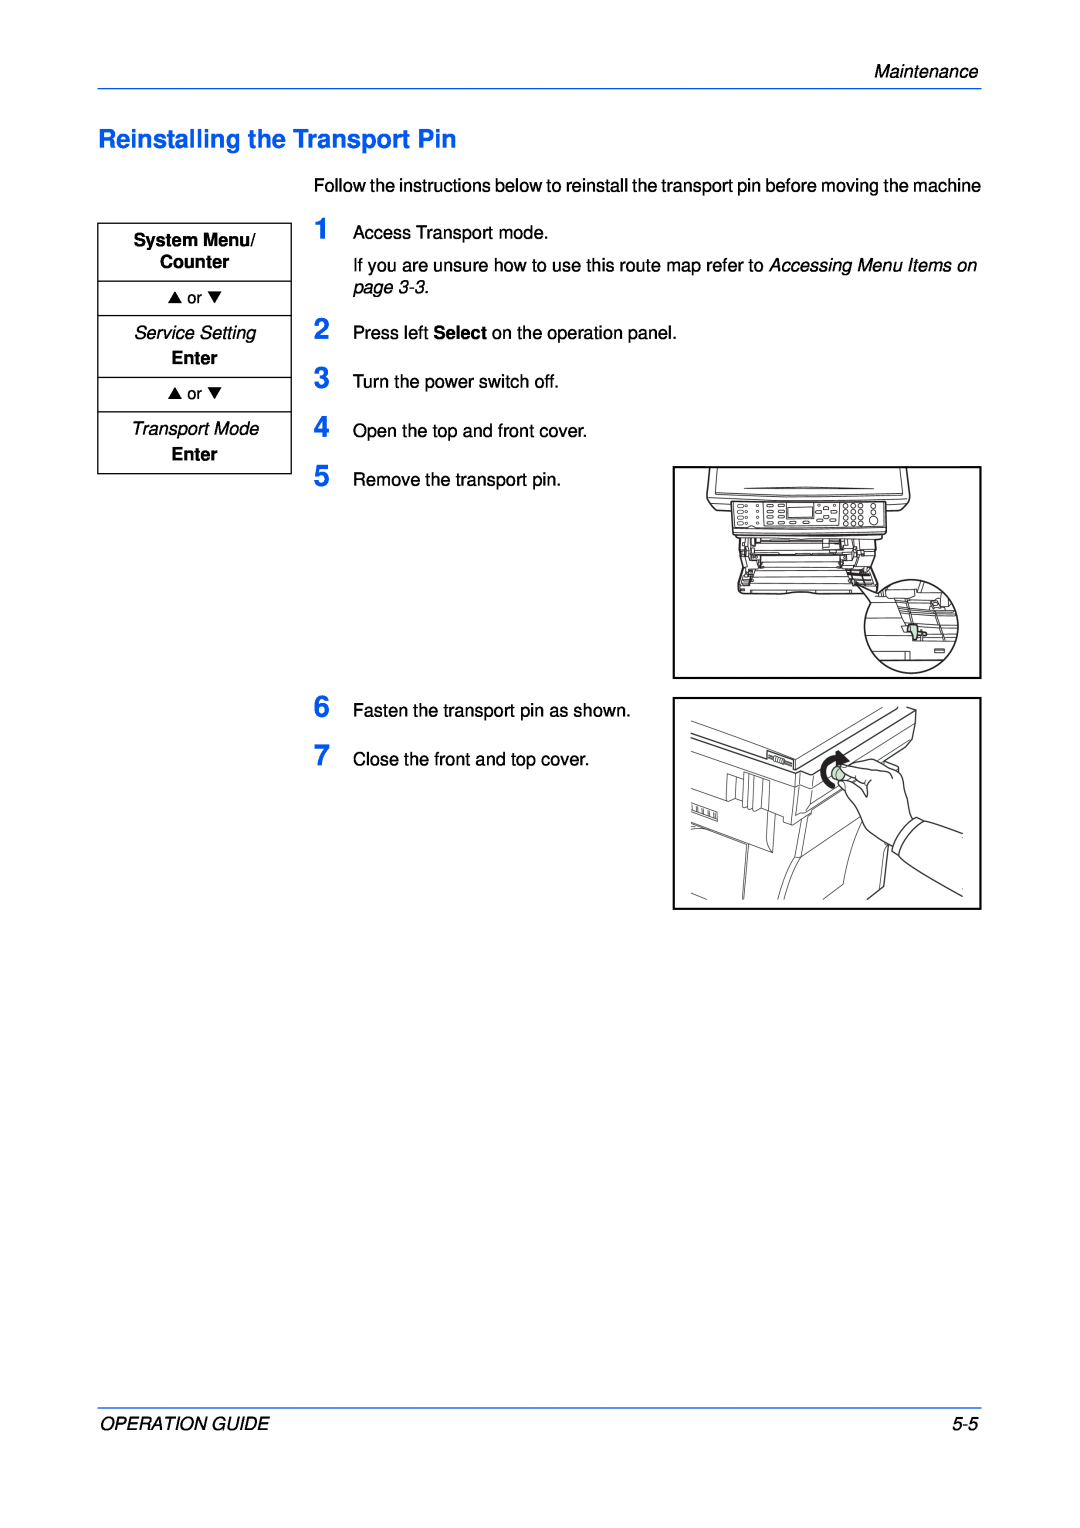 Olivetti 18MF manual Reinstalling the Transport Pin, System Menu Counter, Enter 